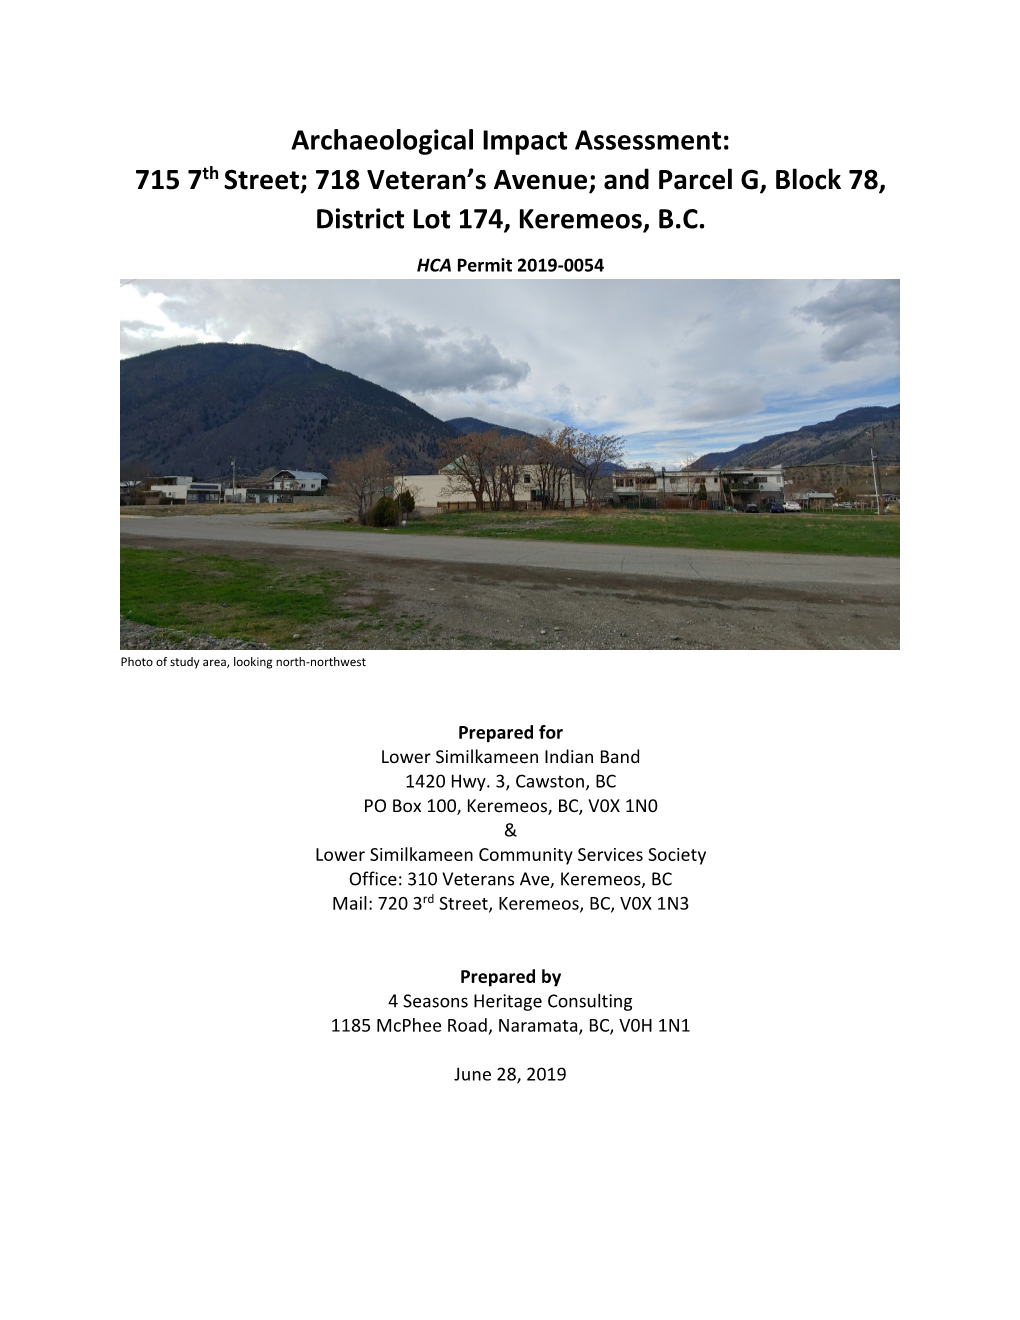 Archaeological Impact Assessment: 715 7Th Street; 718 Veteran’S Avenue; and Parcel G, Block 78, District Lot 174, Keremeos, B.C